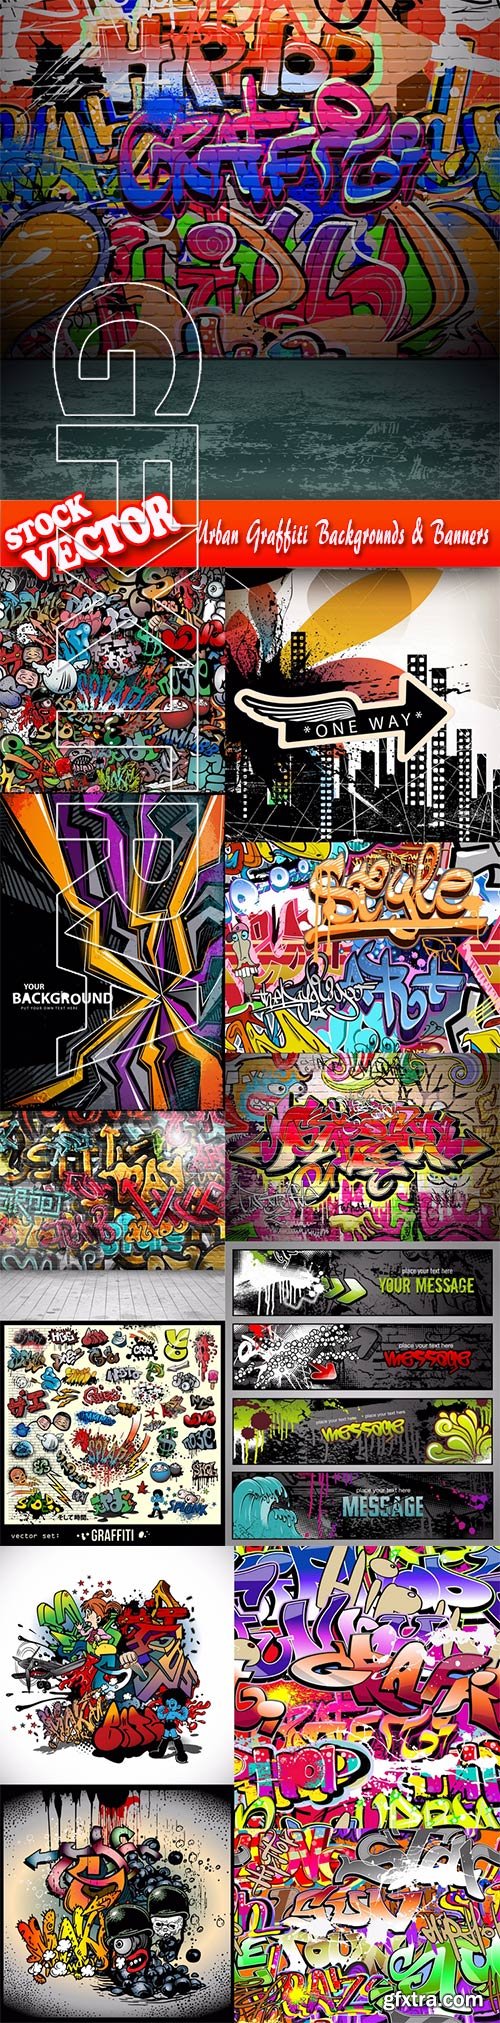 Stock Vector - Urban Graffiti Backgrounds & Banners